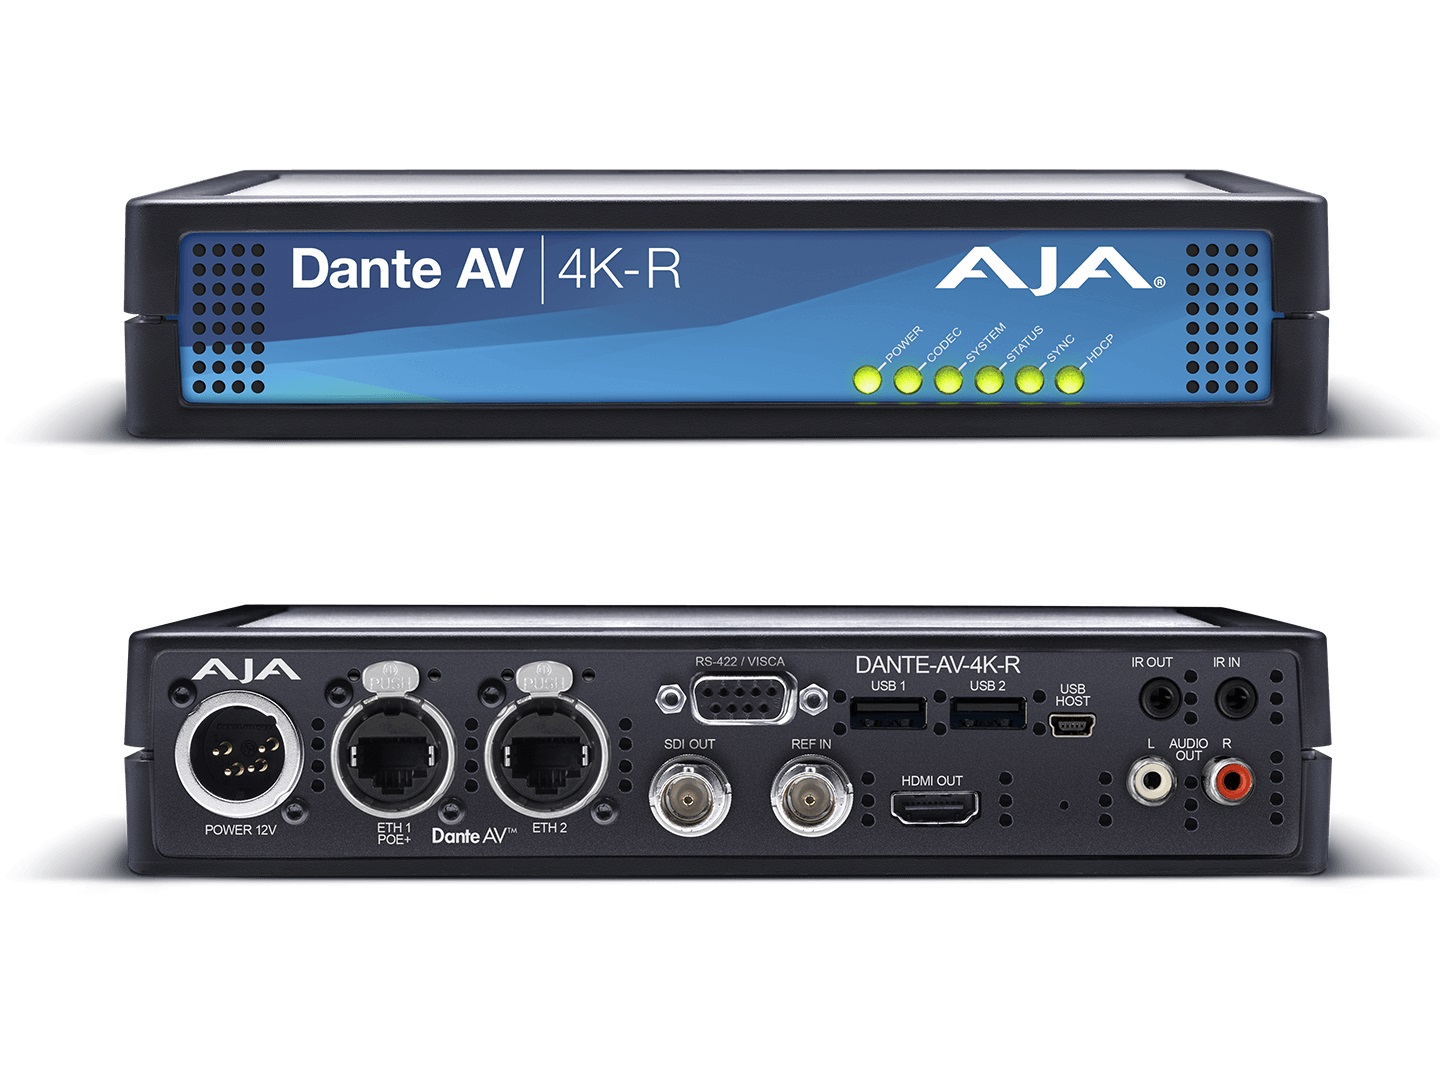 DANTE-AV-4K-R Decode Dante AV Ultra JPEG 2000 into 12G/HDMI Video with Embedded Audio (Receiver) by AJA